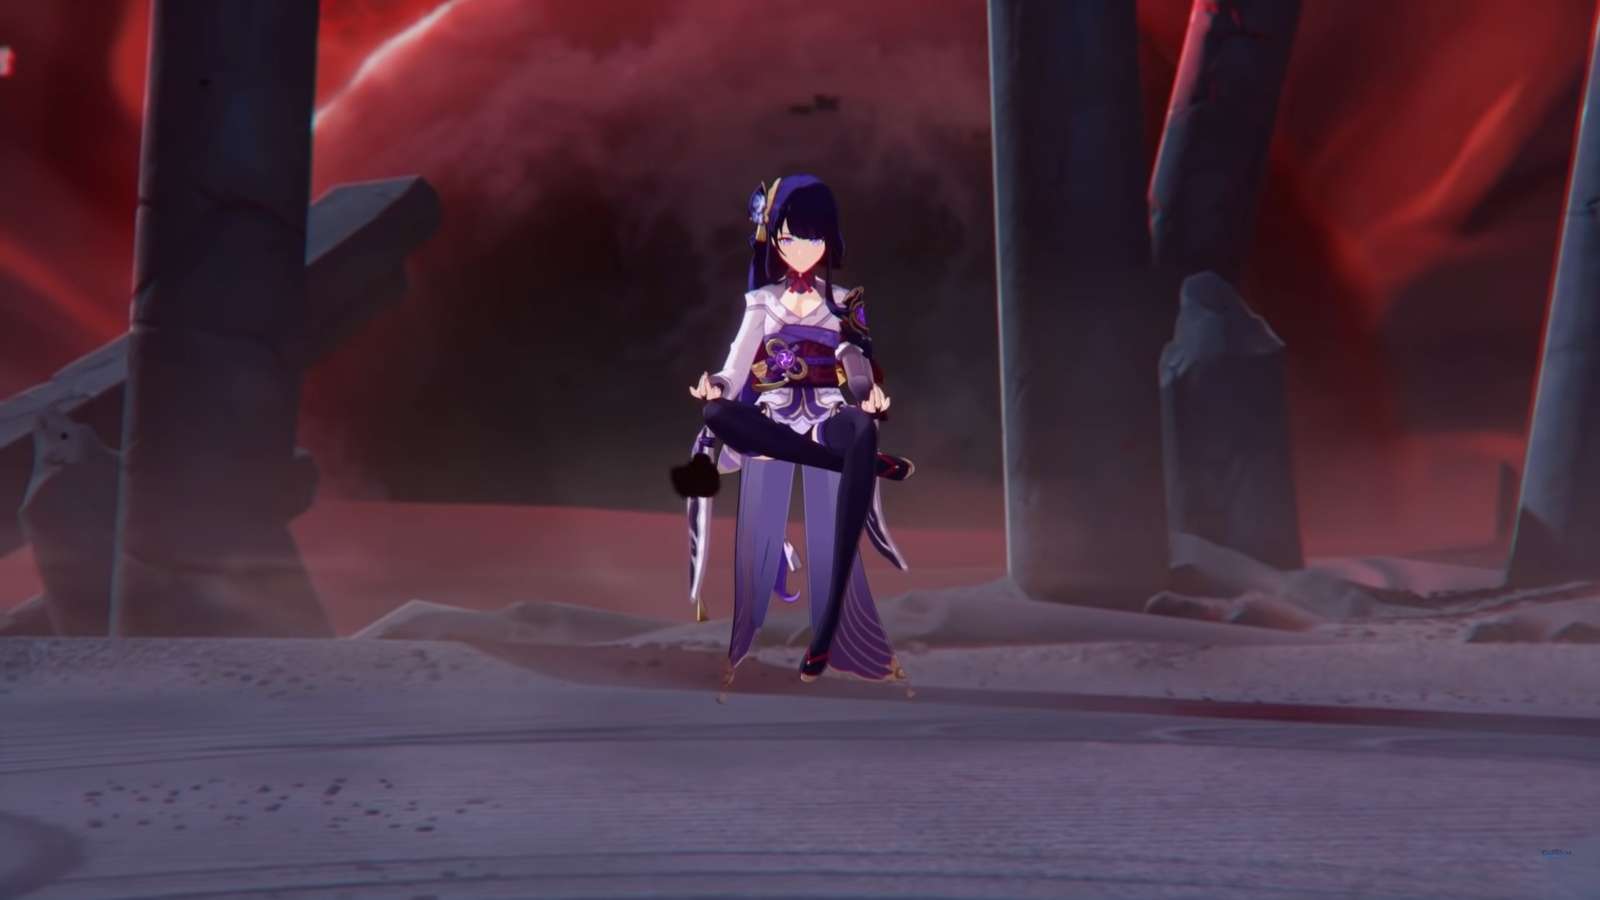 A screenshot from the Raiden Shogun trailer